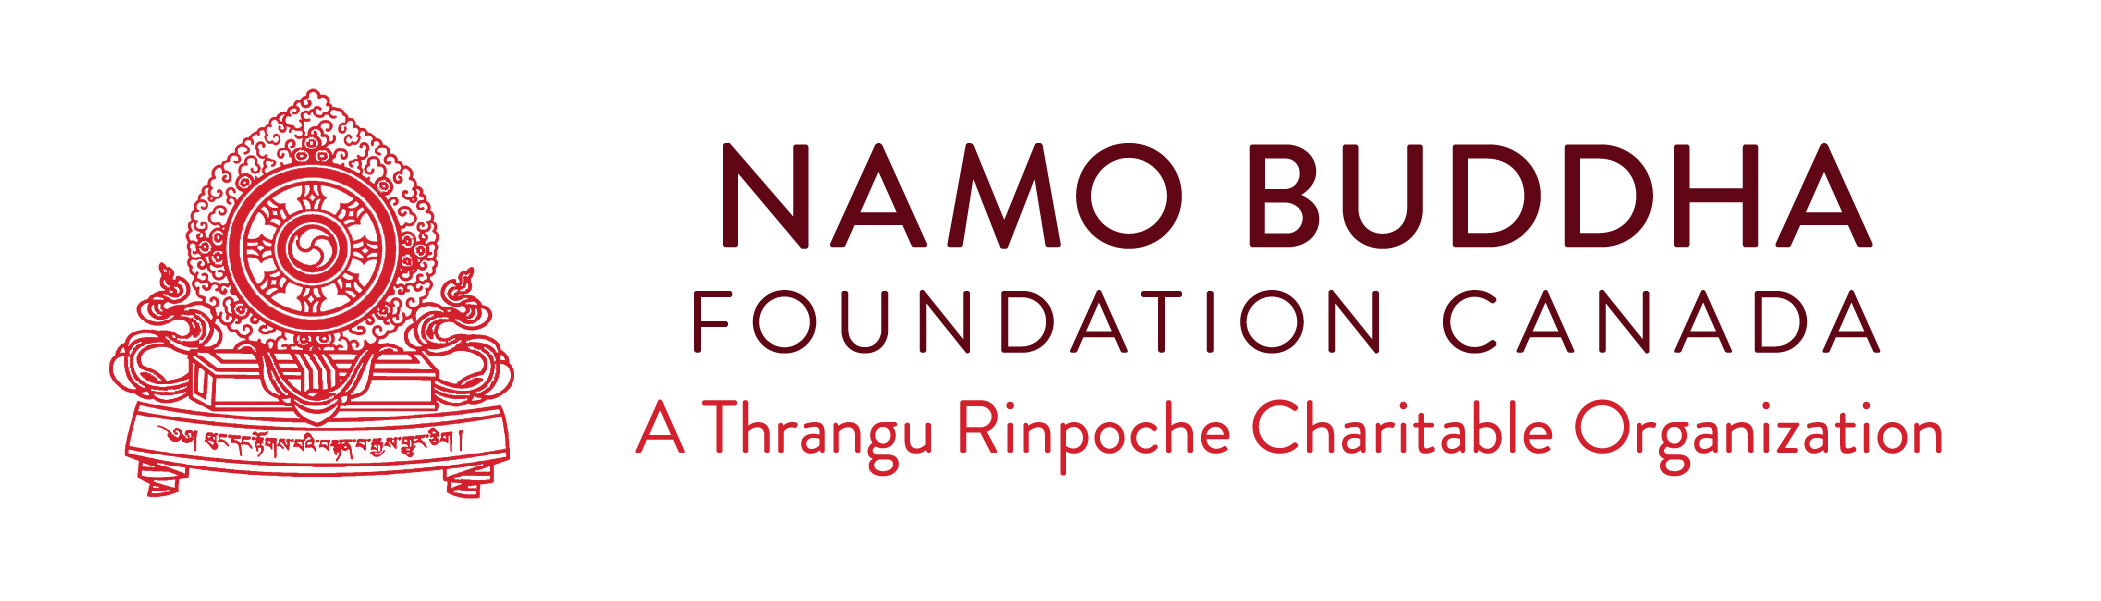 NAMO BUDDHA FOUNDATION logo